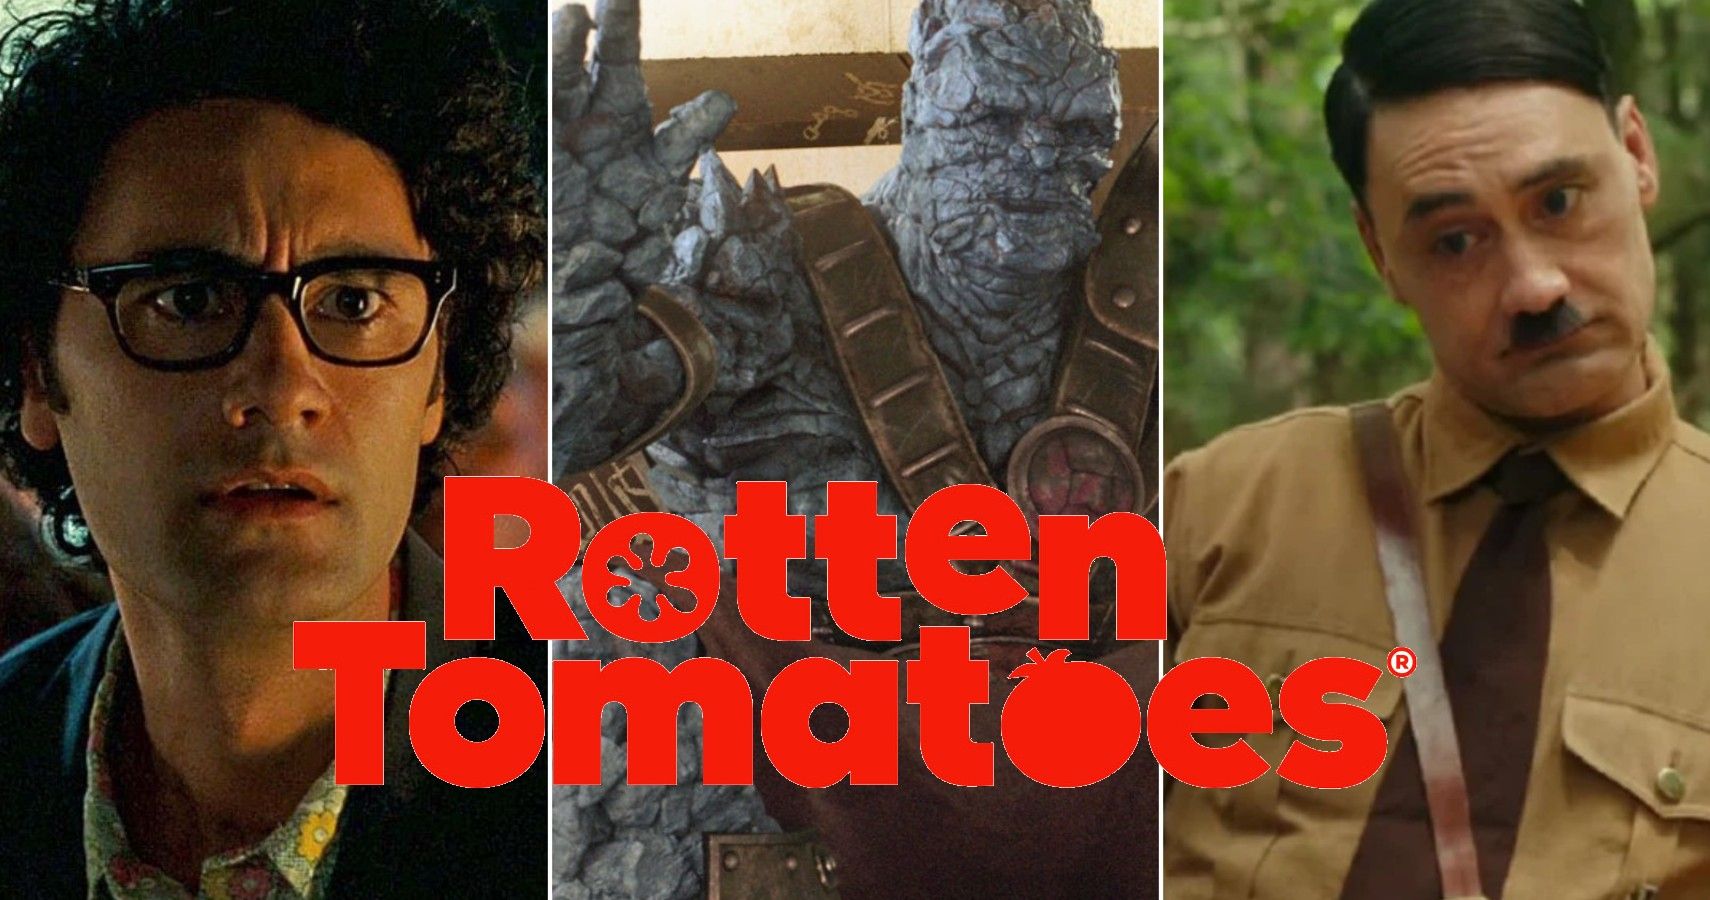 The Grandmaster - Rotten Tomatoes